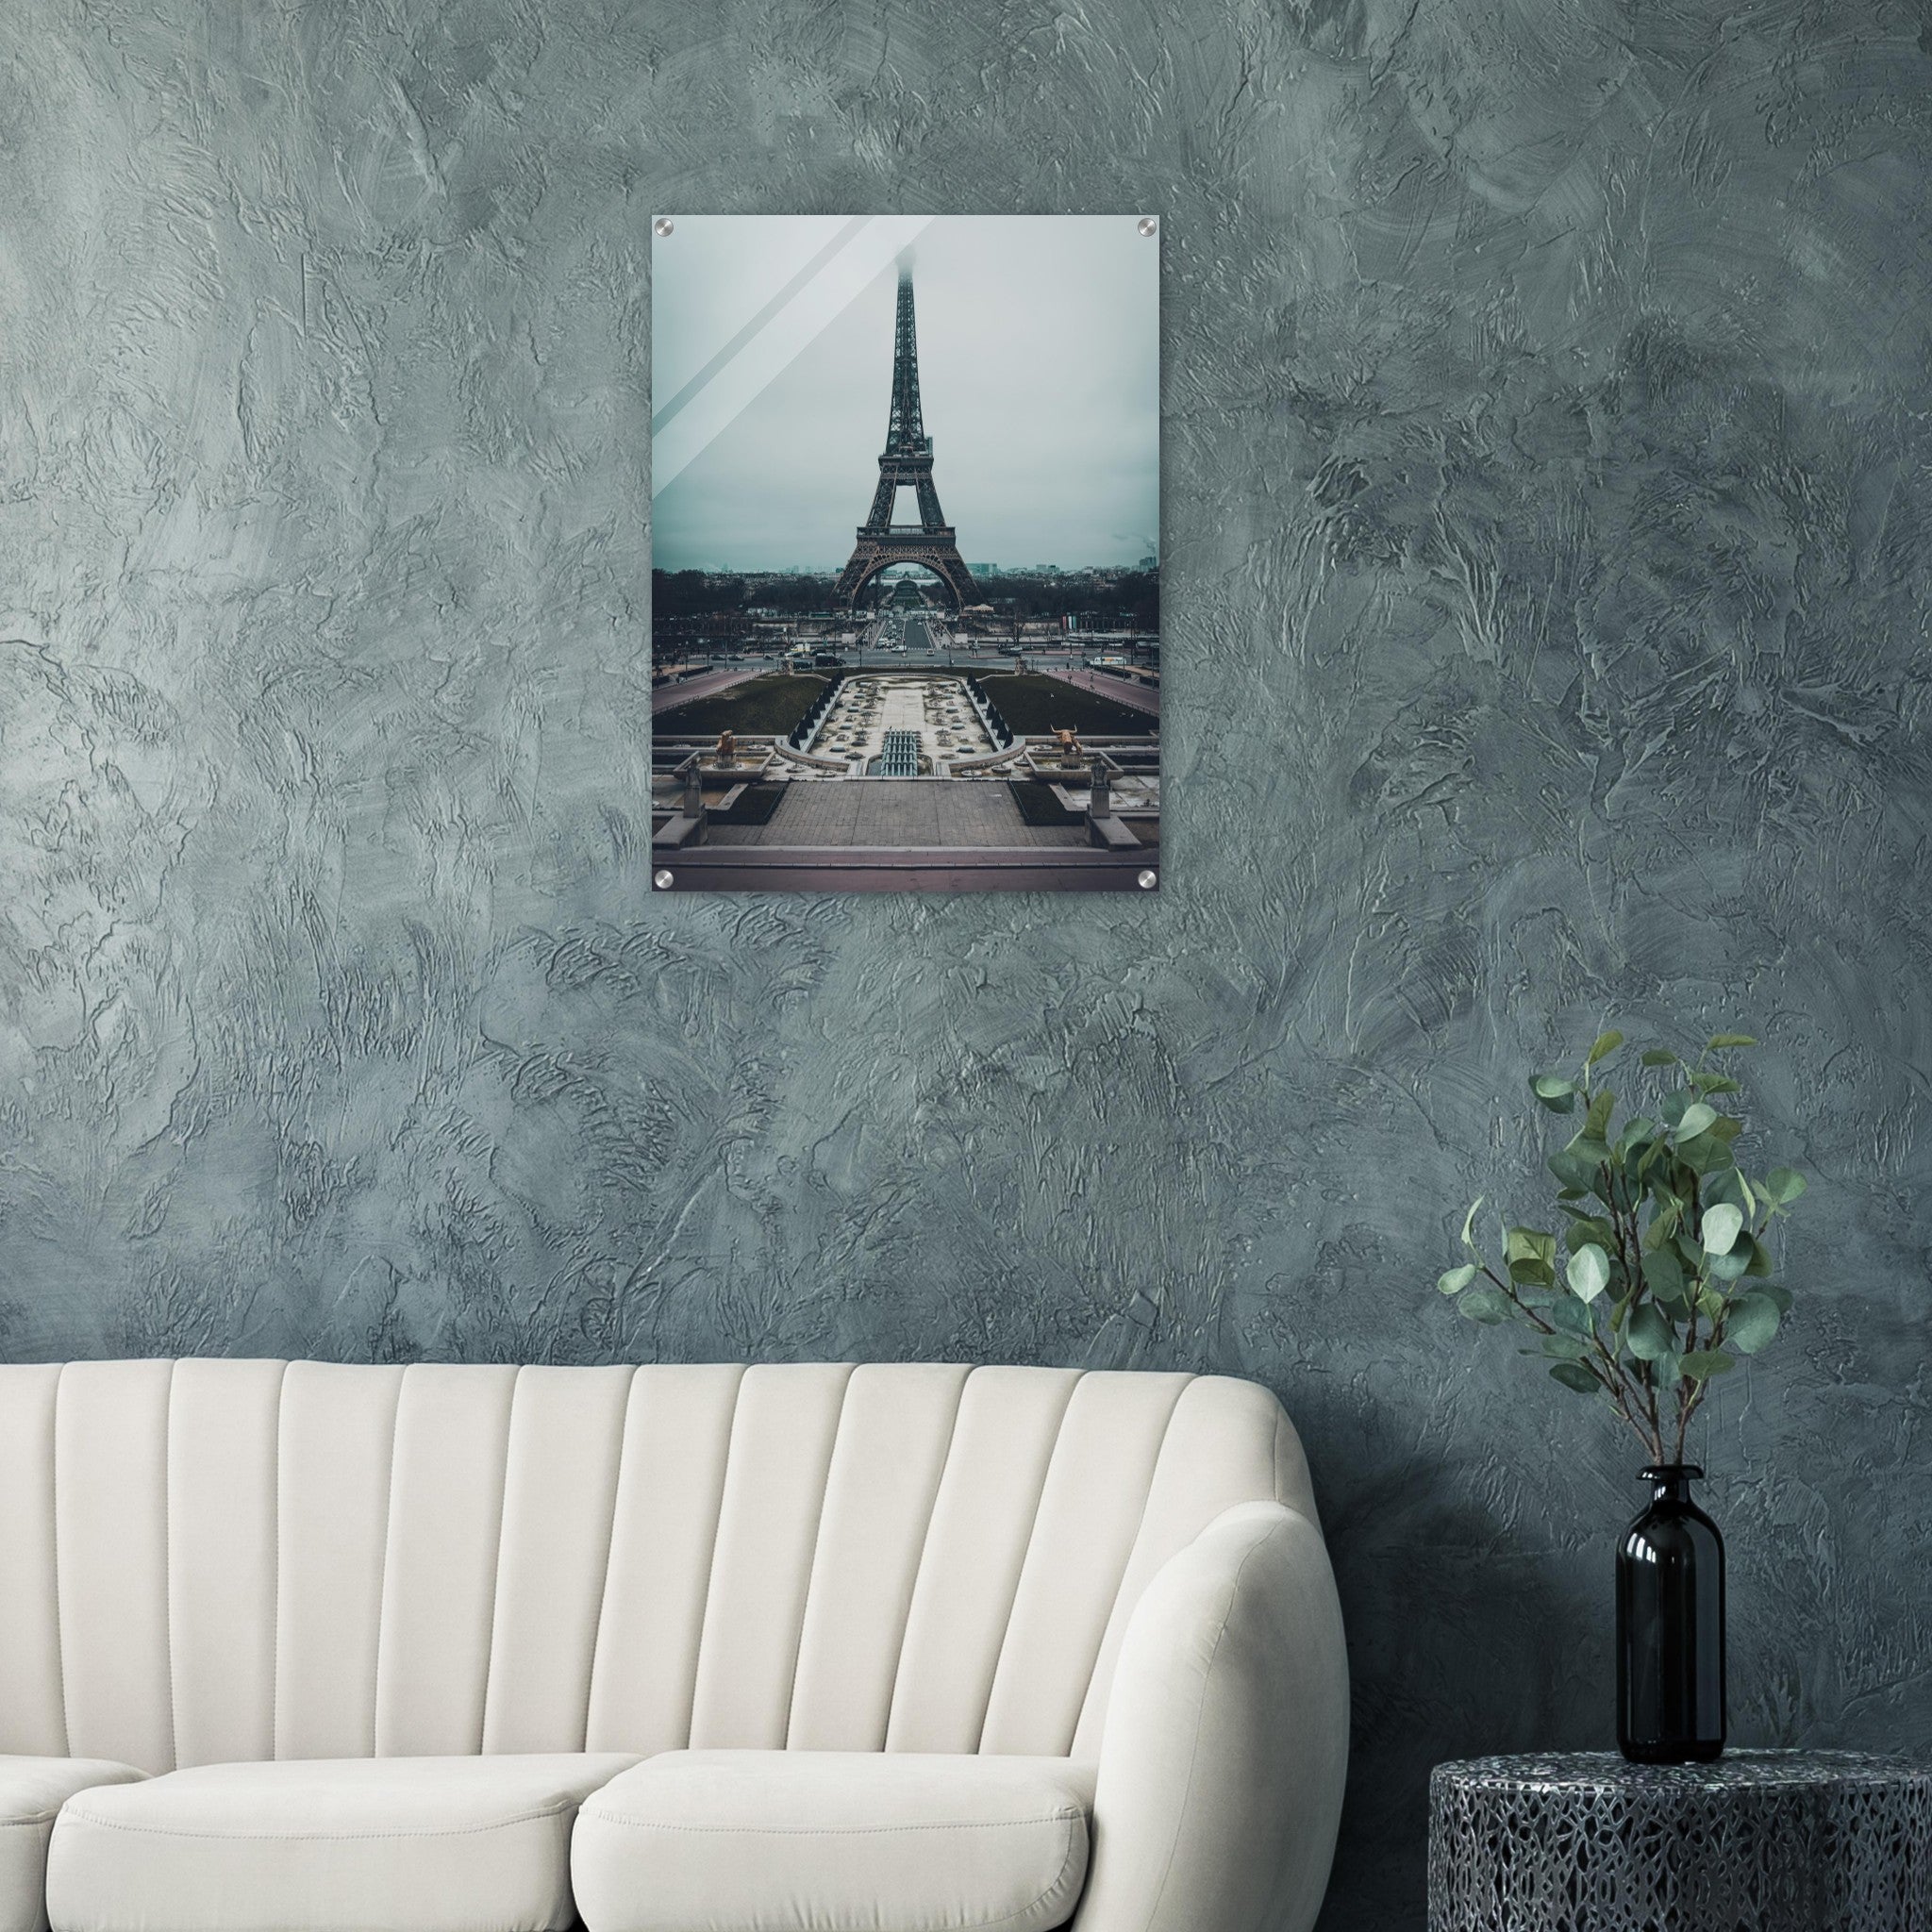 Mystic Paris: Eiffel Tower in the Mist | Acrylic Print